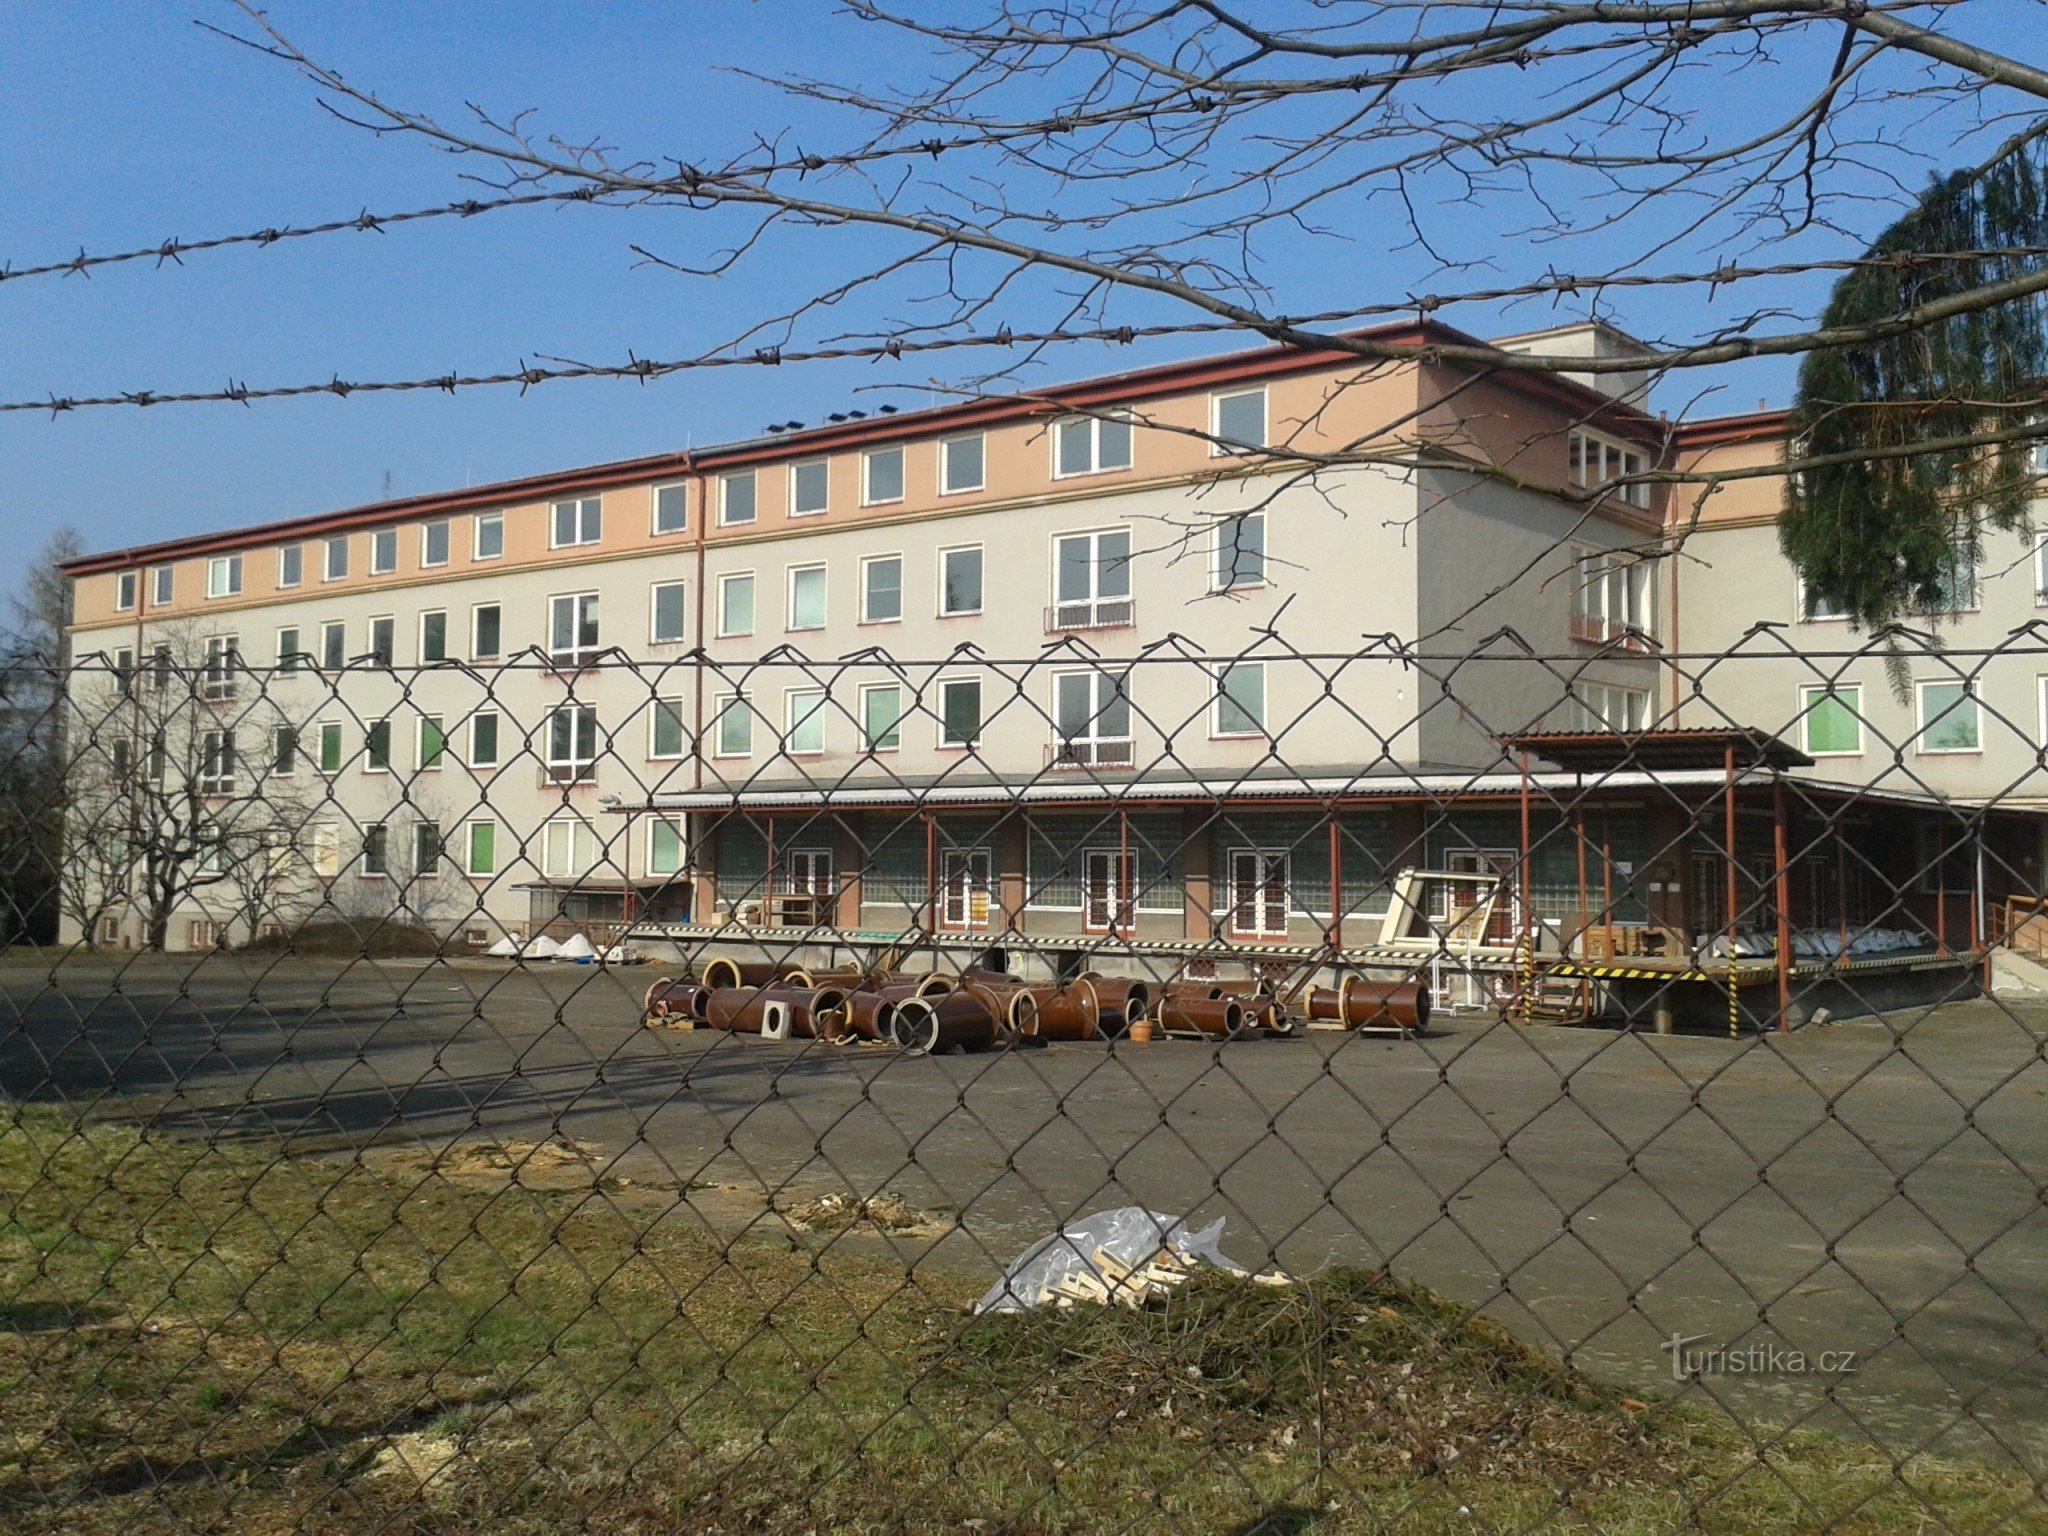 Zábřeh - area of ​​the sleeping hospital (warehouse of medical supplies)